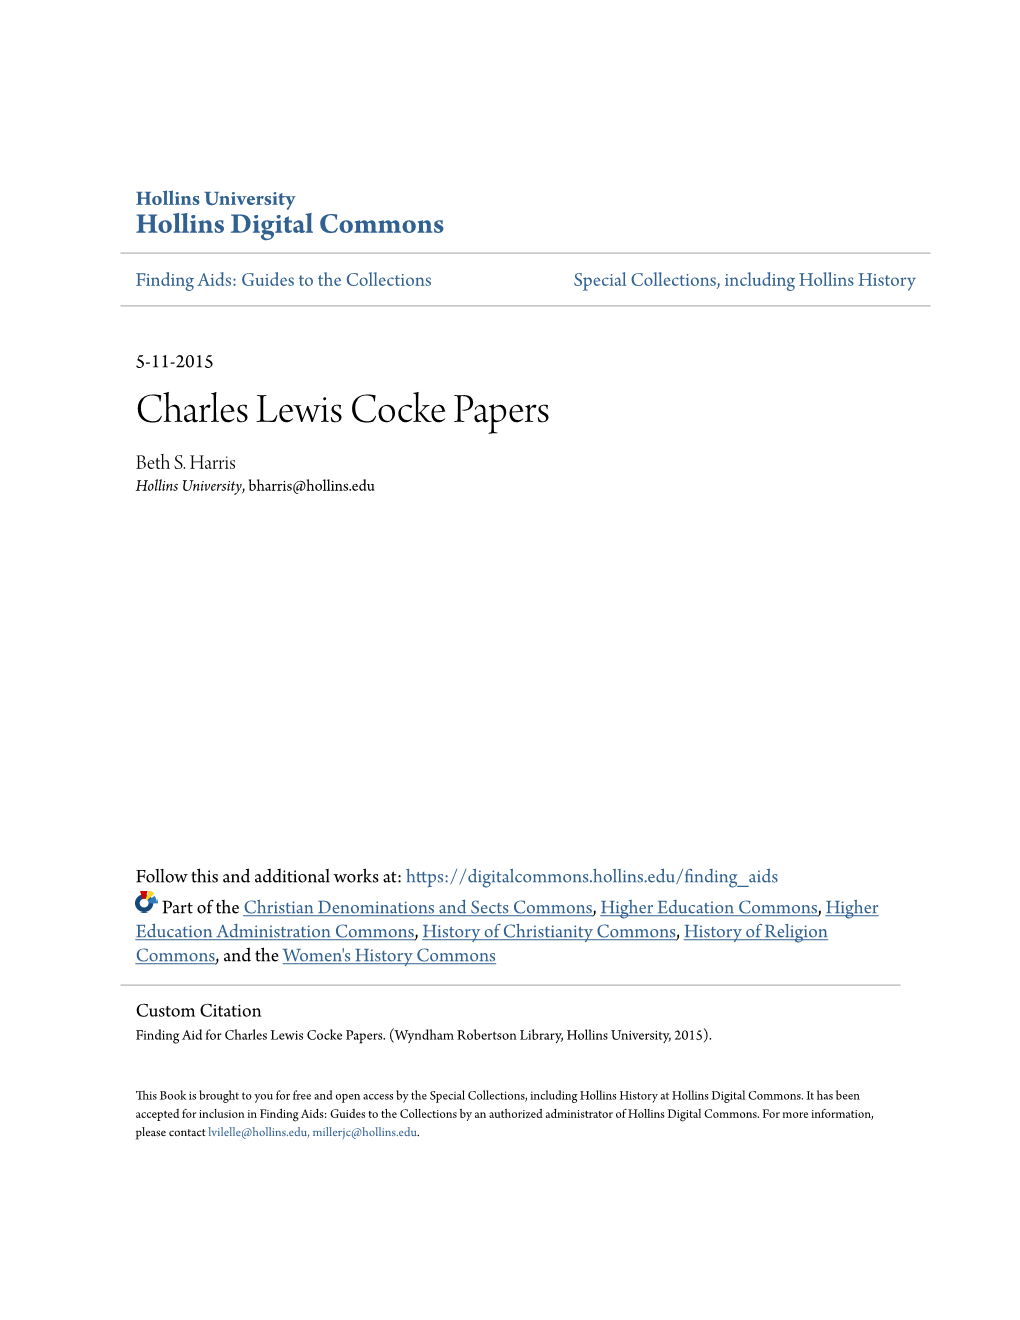 Charles Lewis Cocke Papers Beth S